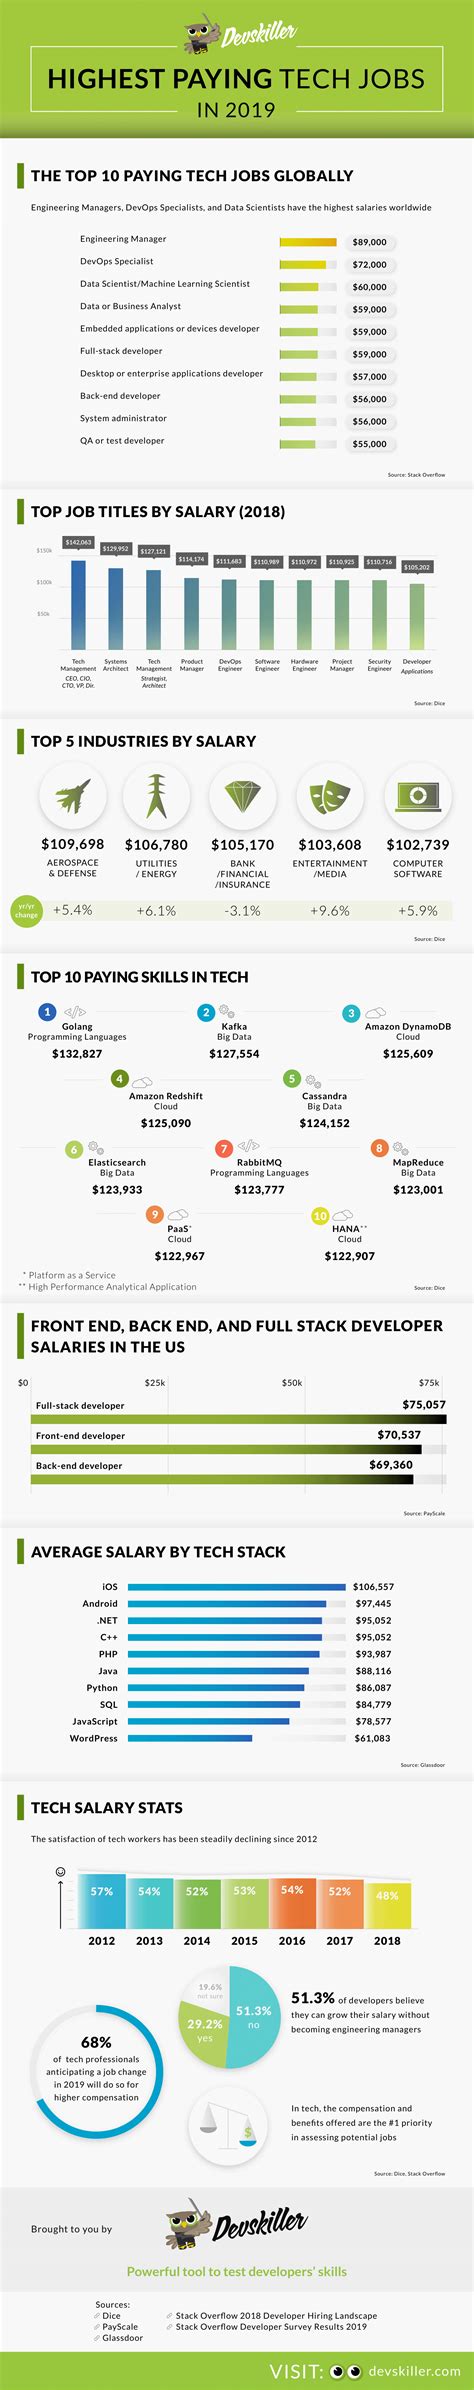 [infographic] highest paying tech jobs laptrinhx news